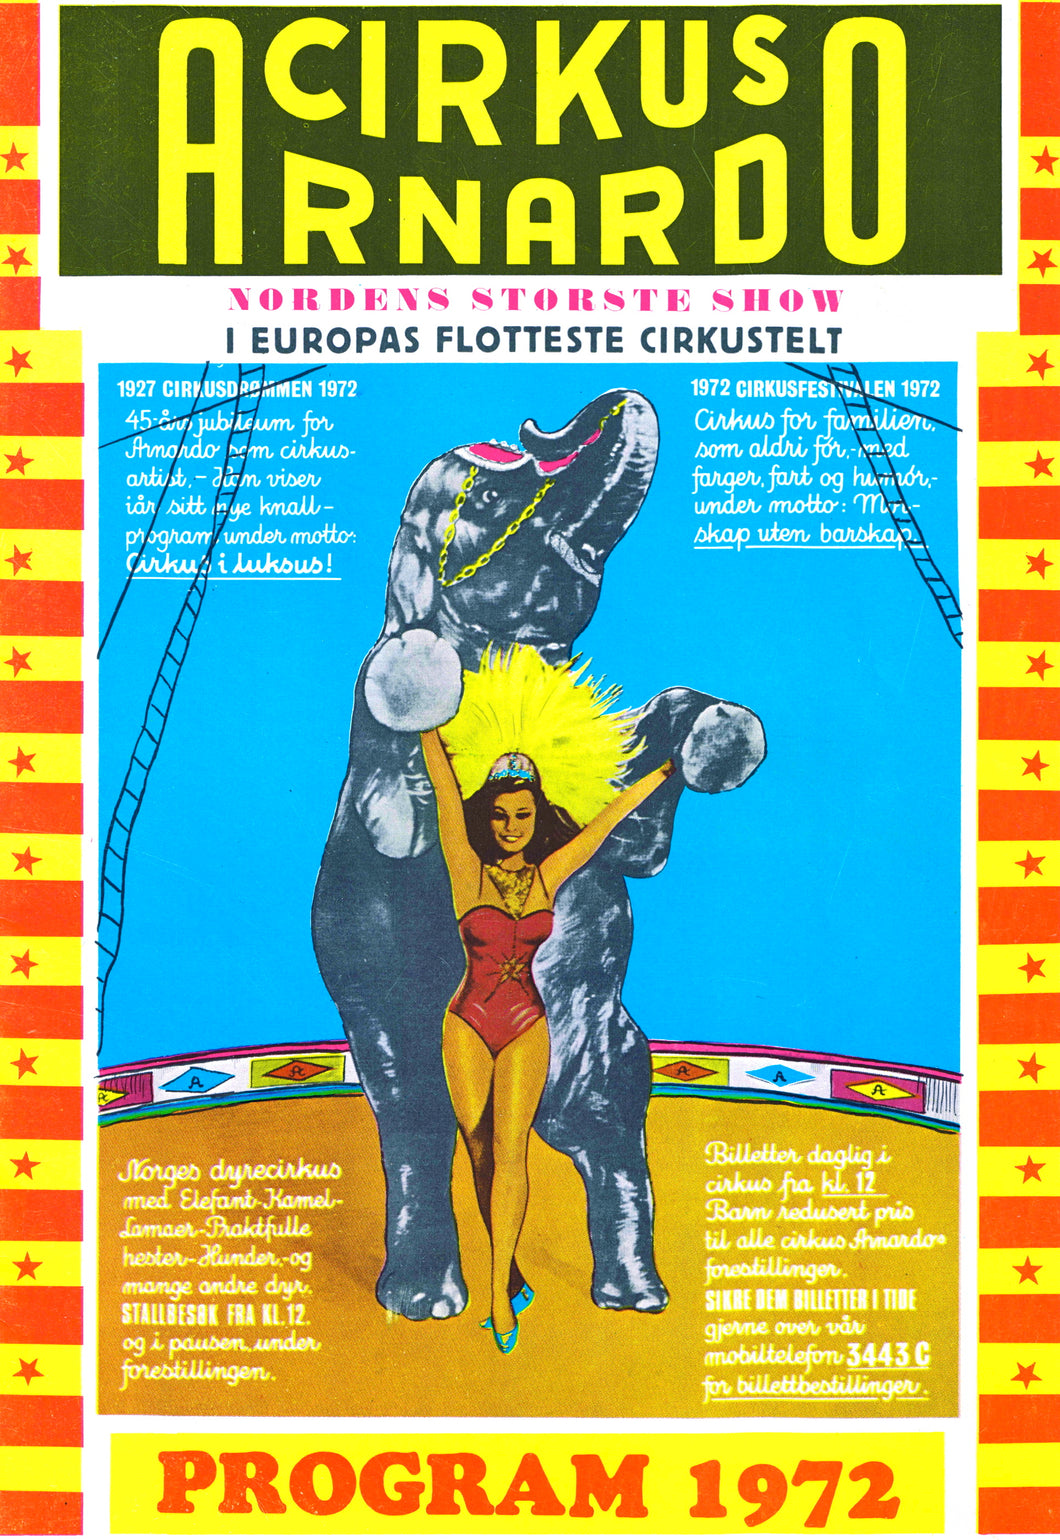 Program 1972